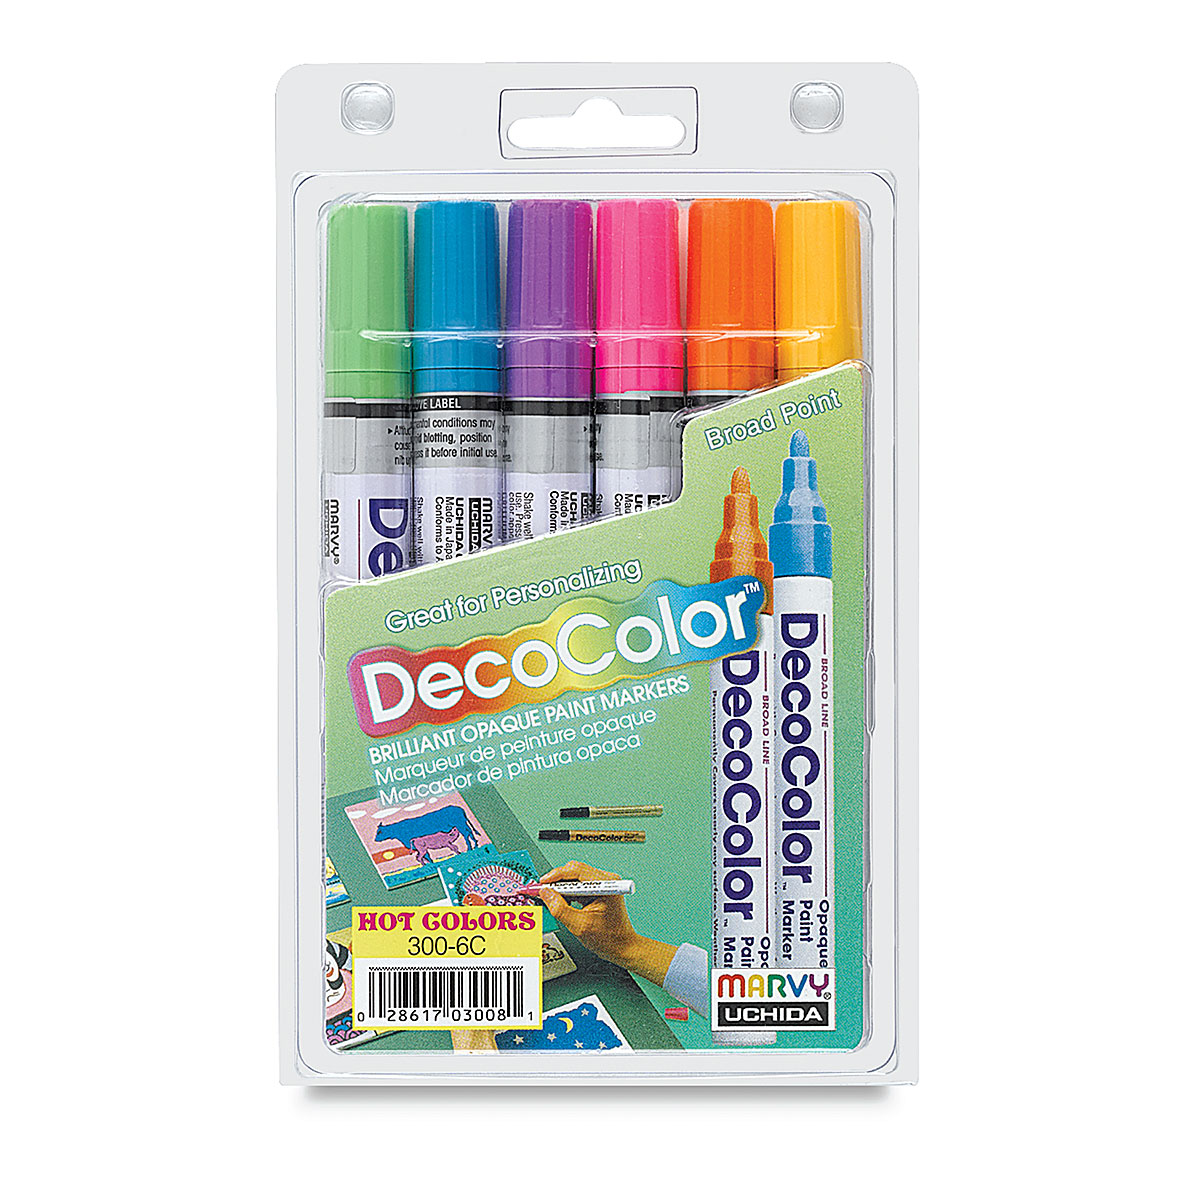 Decocolor Paint Marker - Silver, Extra Fine Tip